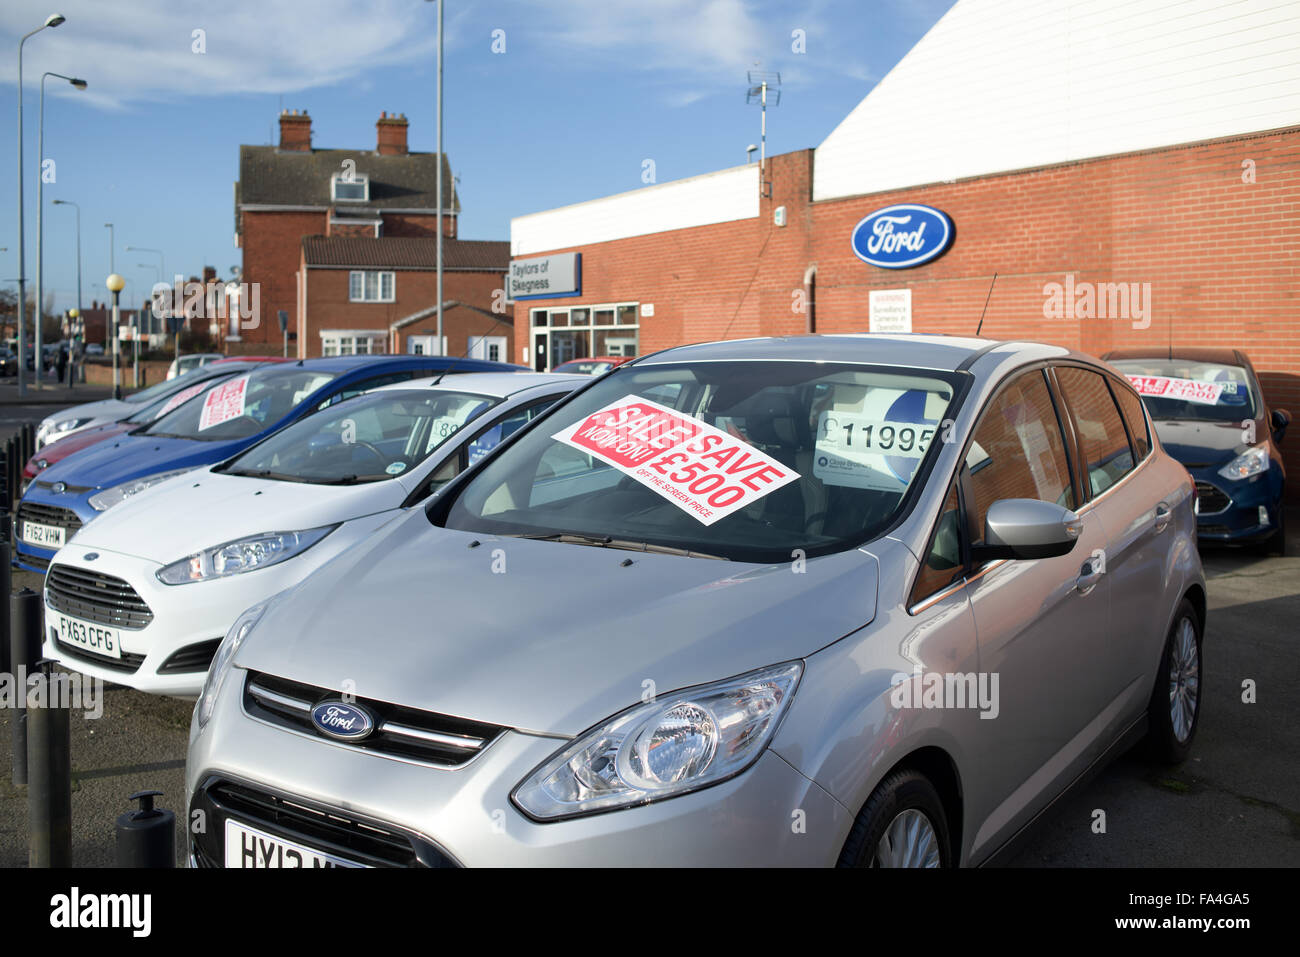 Garage Forecourt Used Car Sales Stock Photo